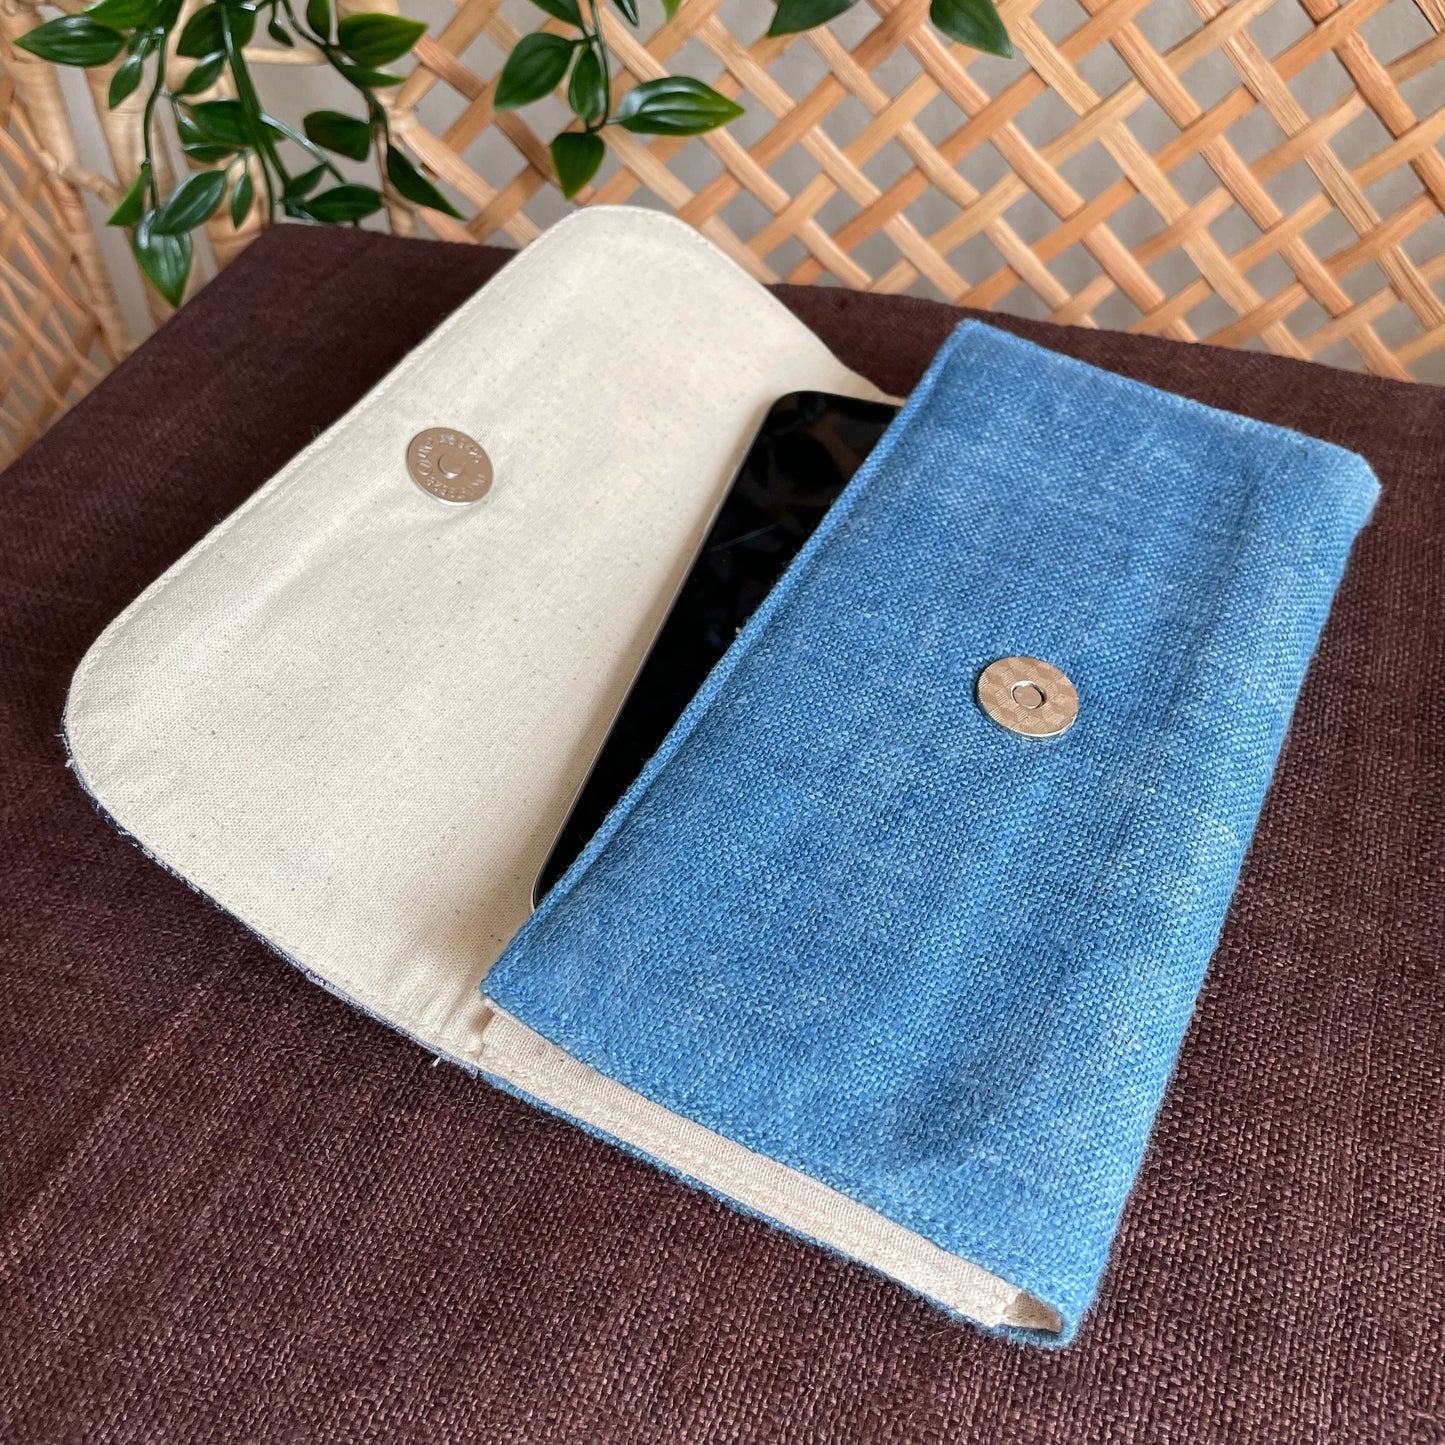 Light blue long purse, Hemp fabric, Indigo Batik fabric, H'mong pattern